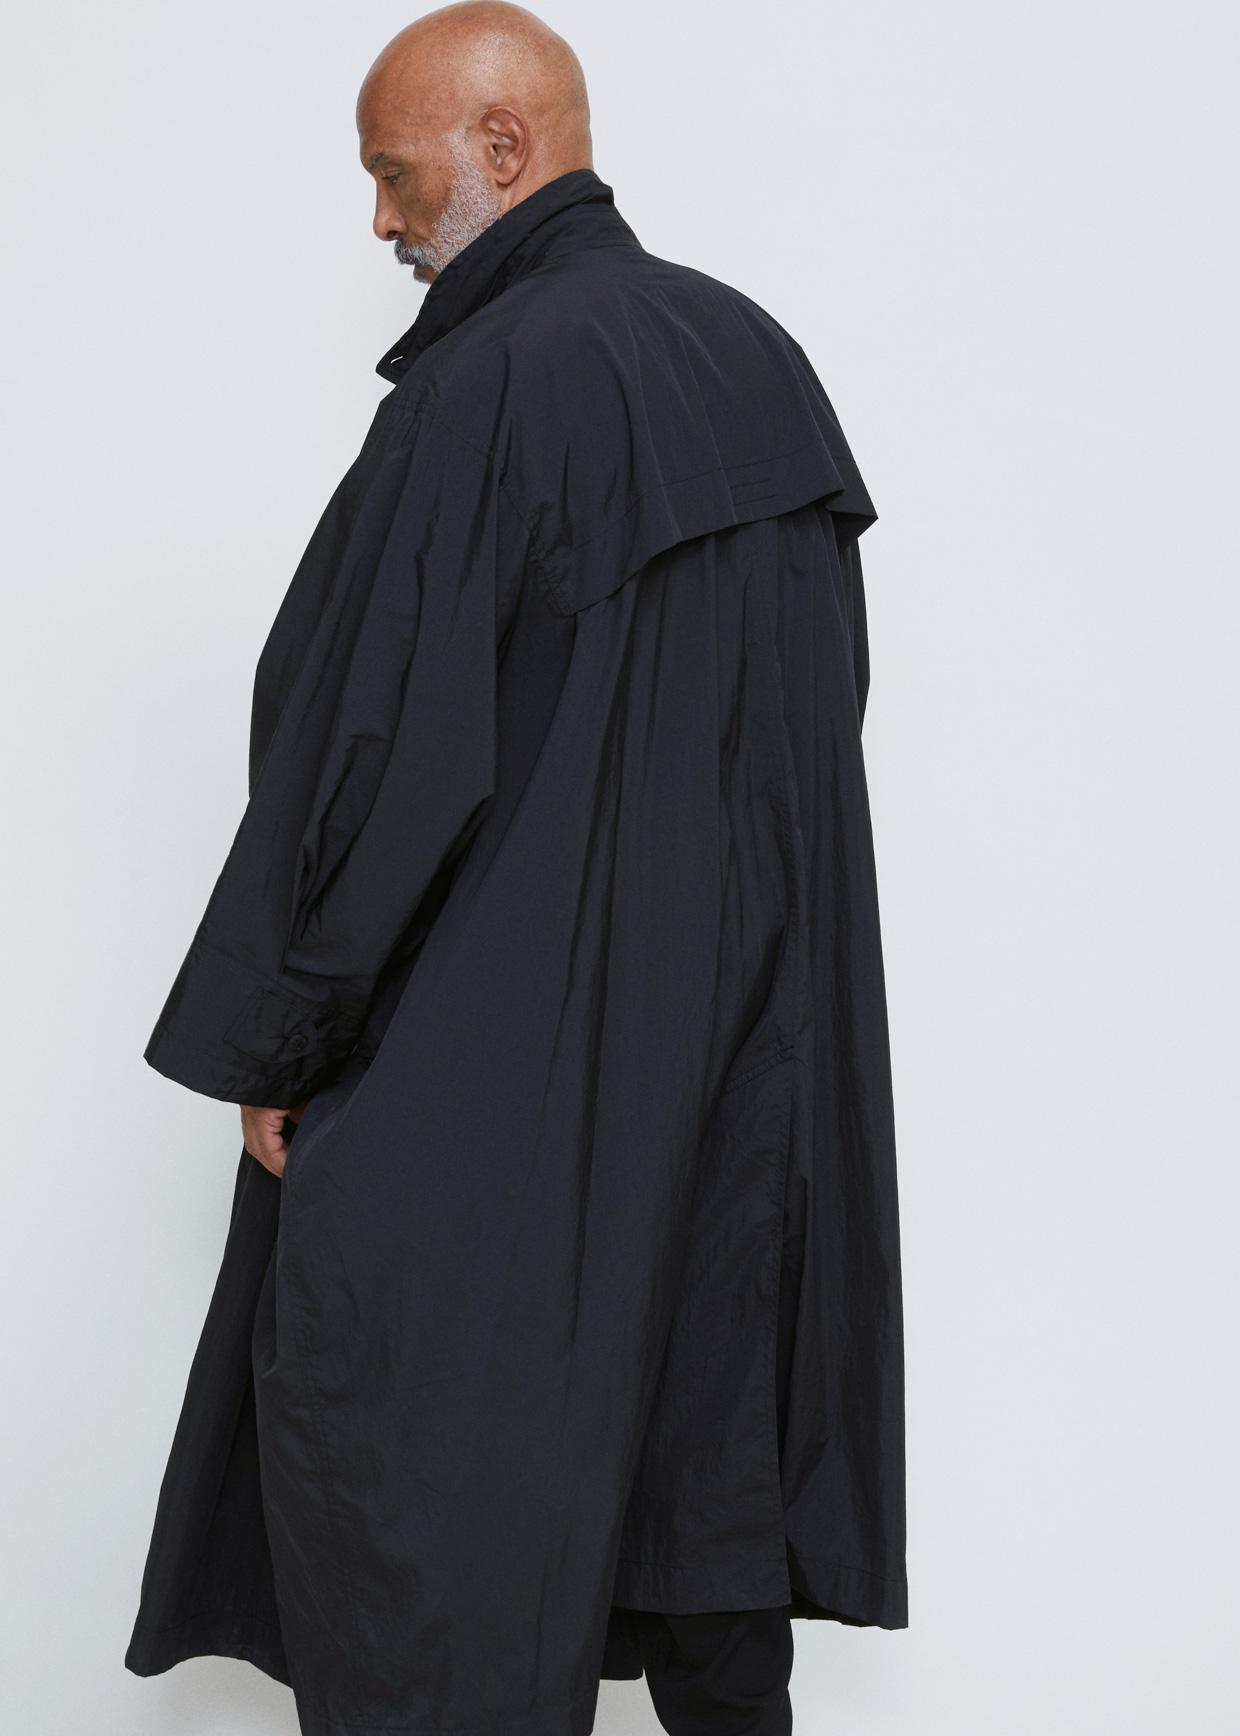 Issey Miyake Black Wind Taffeta Coat for Men - Lyst